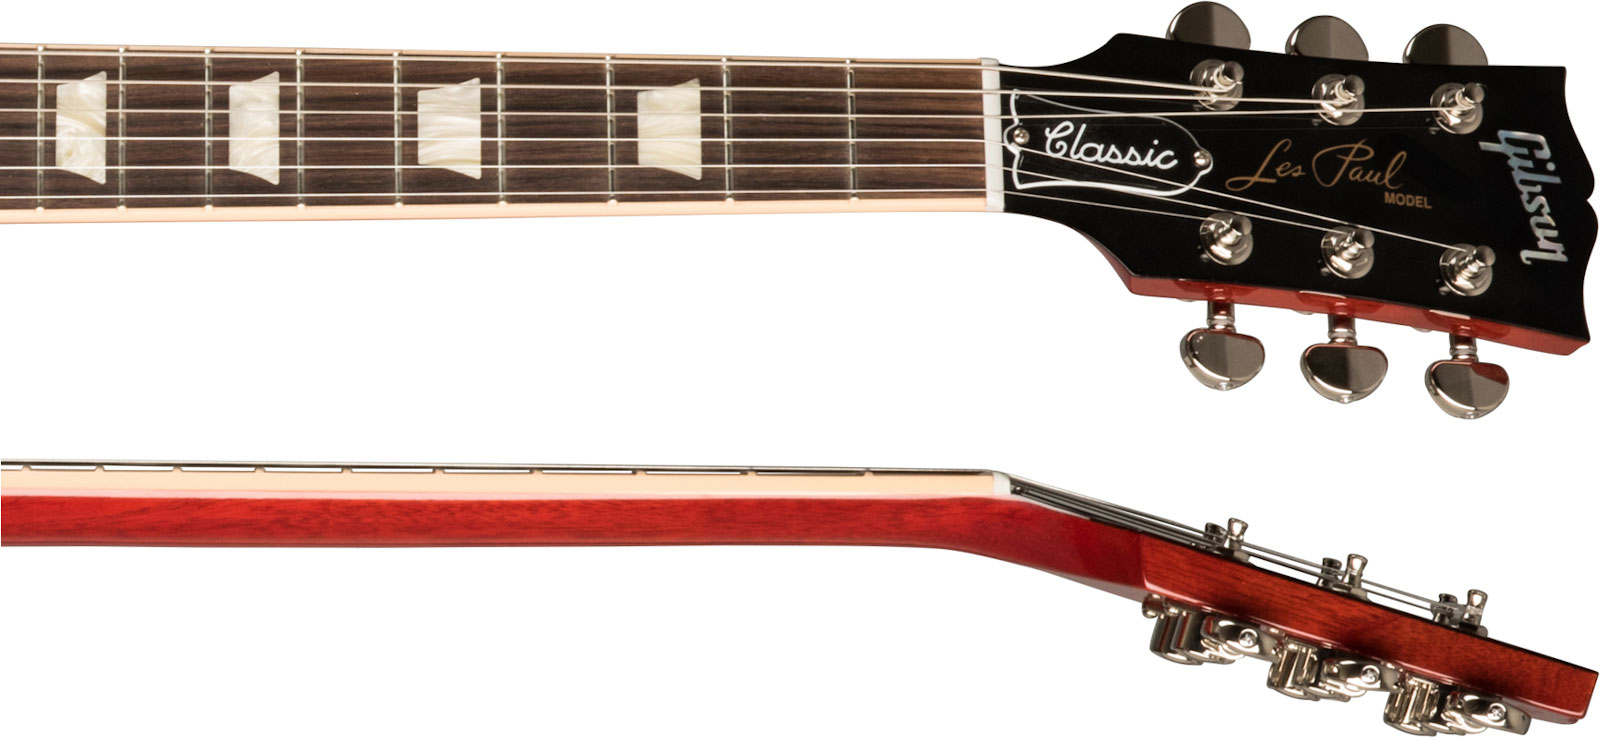 Gibson Les Paul Classic Modern 2h Ht Rw - Trans Cherry - Guitarra eléctrica de corte único. - Variation 3